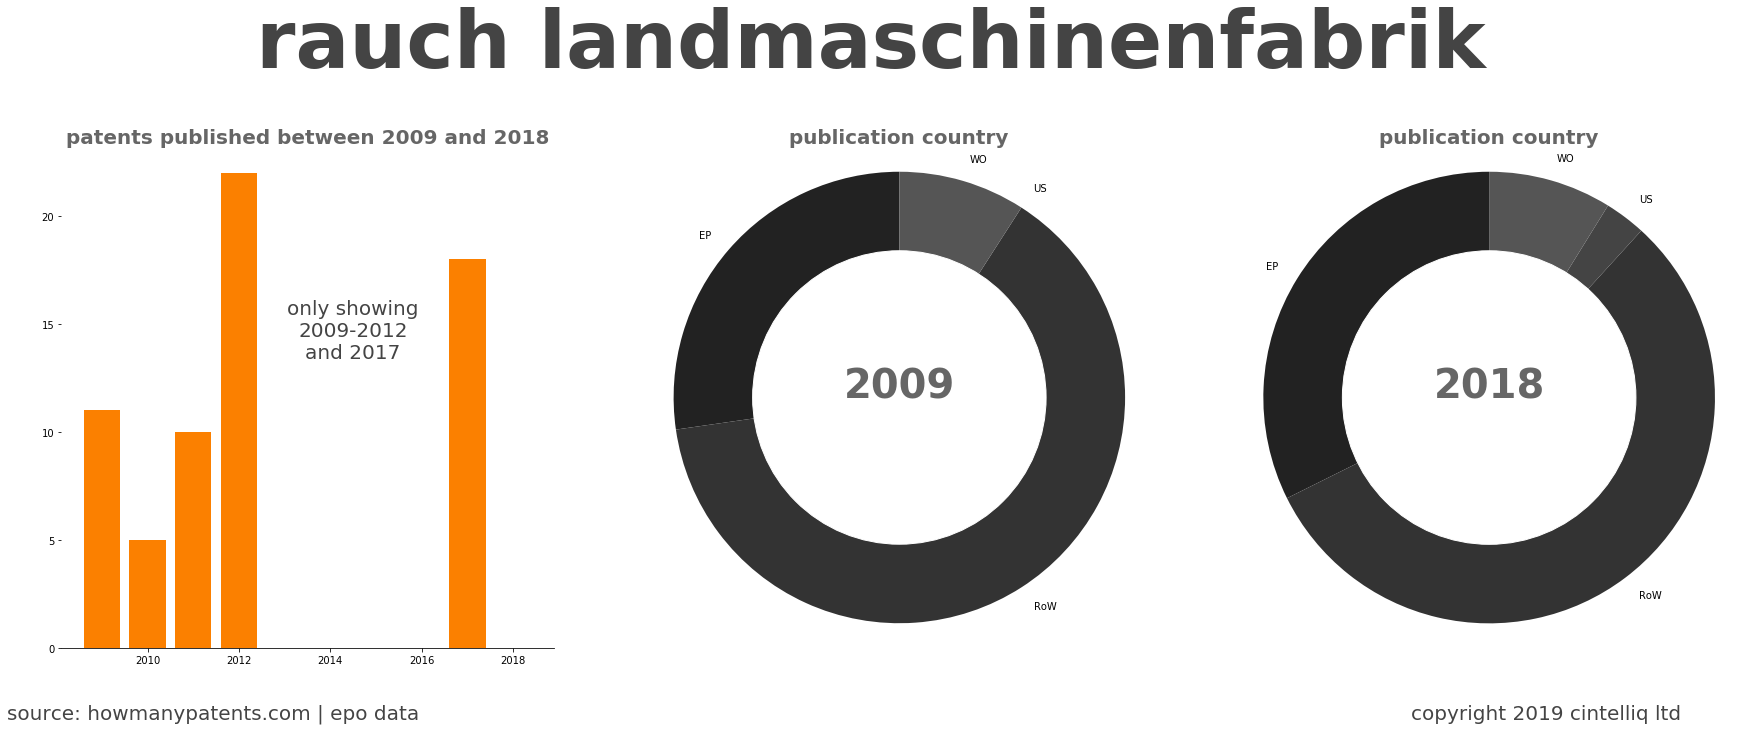 summary of patents for Rauch Landmaschinenfabrik